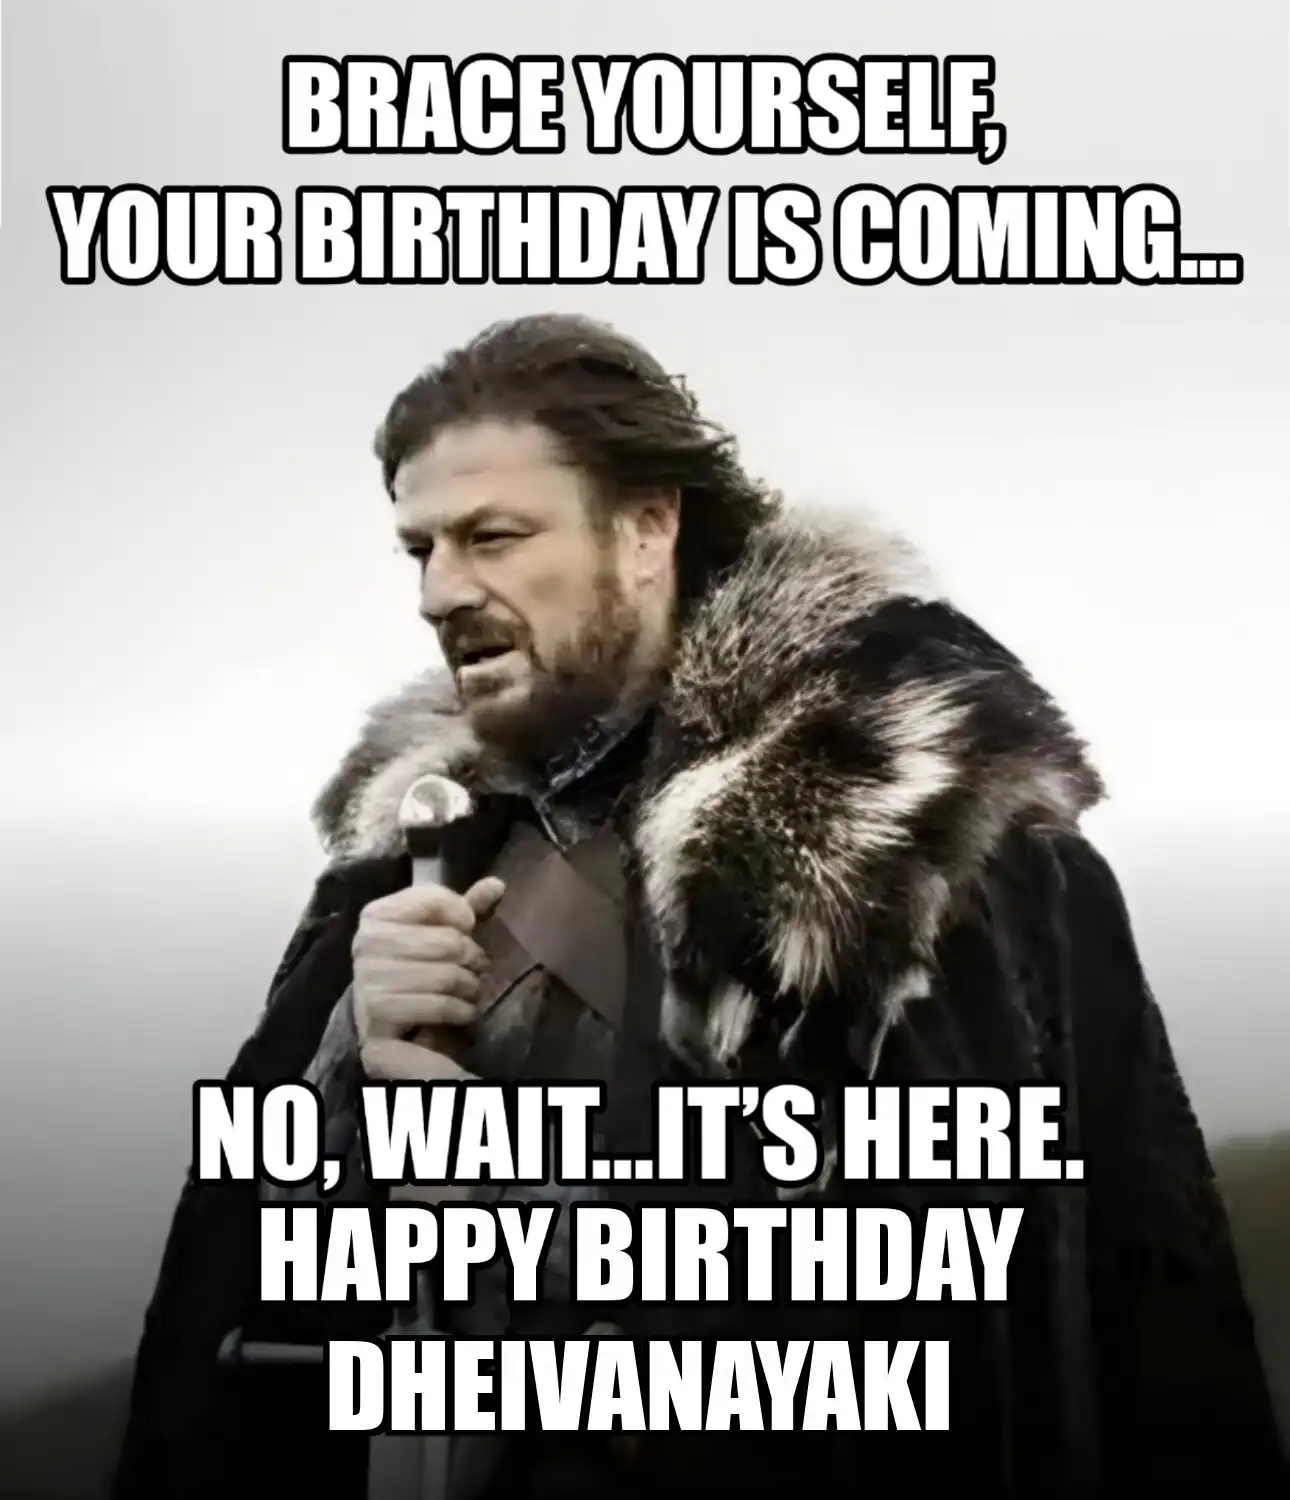 Happy Birthday Dheivanayaki Brace Yourself Your Birthday Is Coming Meme